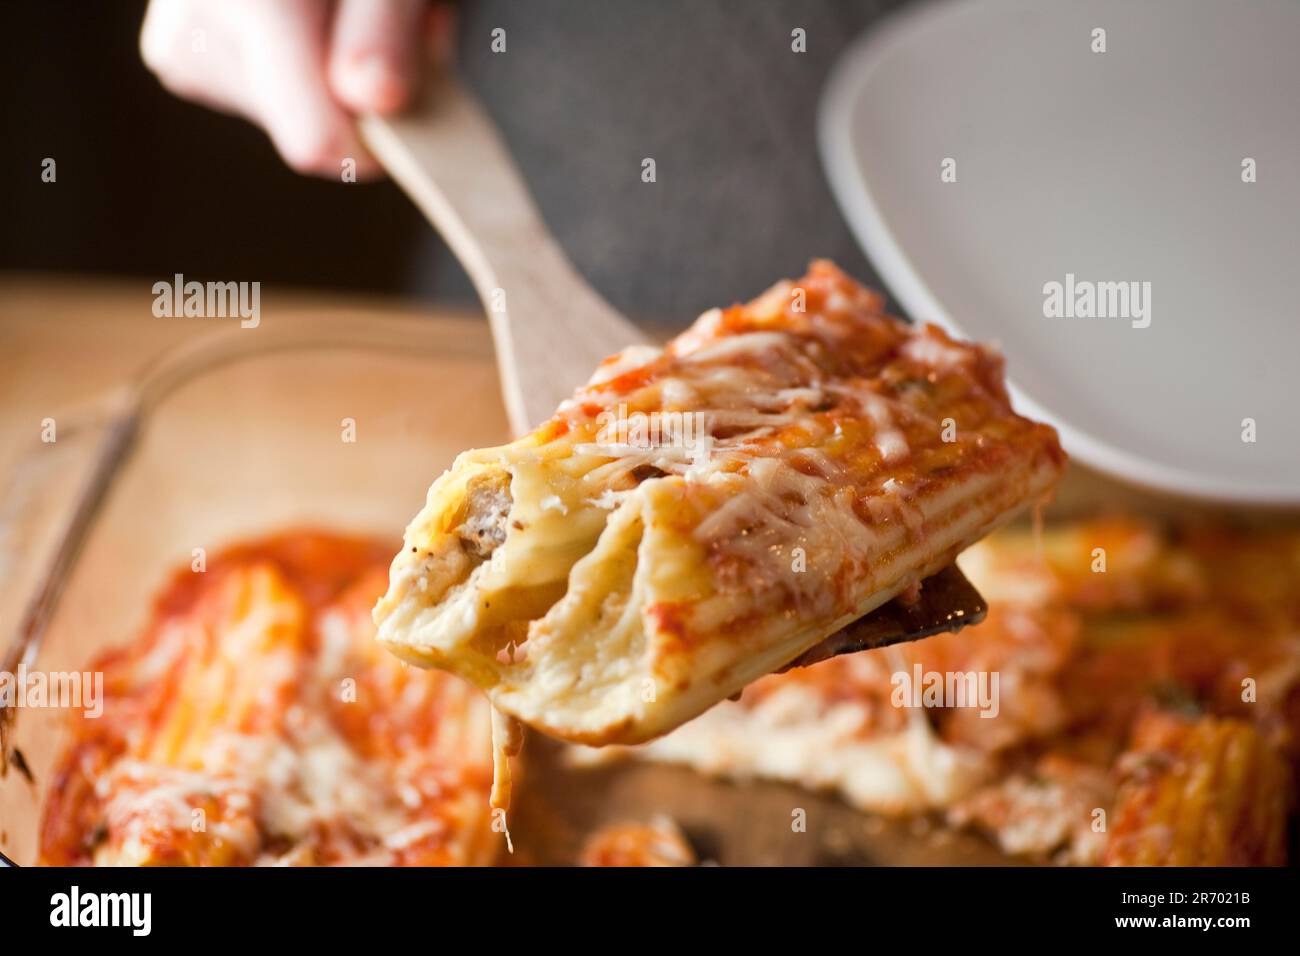 https://c8.alamy.com/comp/2R7021B/home-made-lasagna-on-a-spatula-in-a-house-in-seattle-wa-2R7021B.jpg